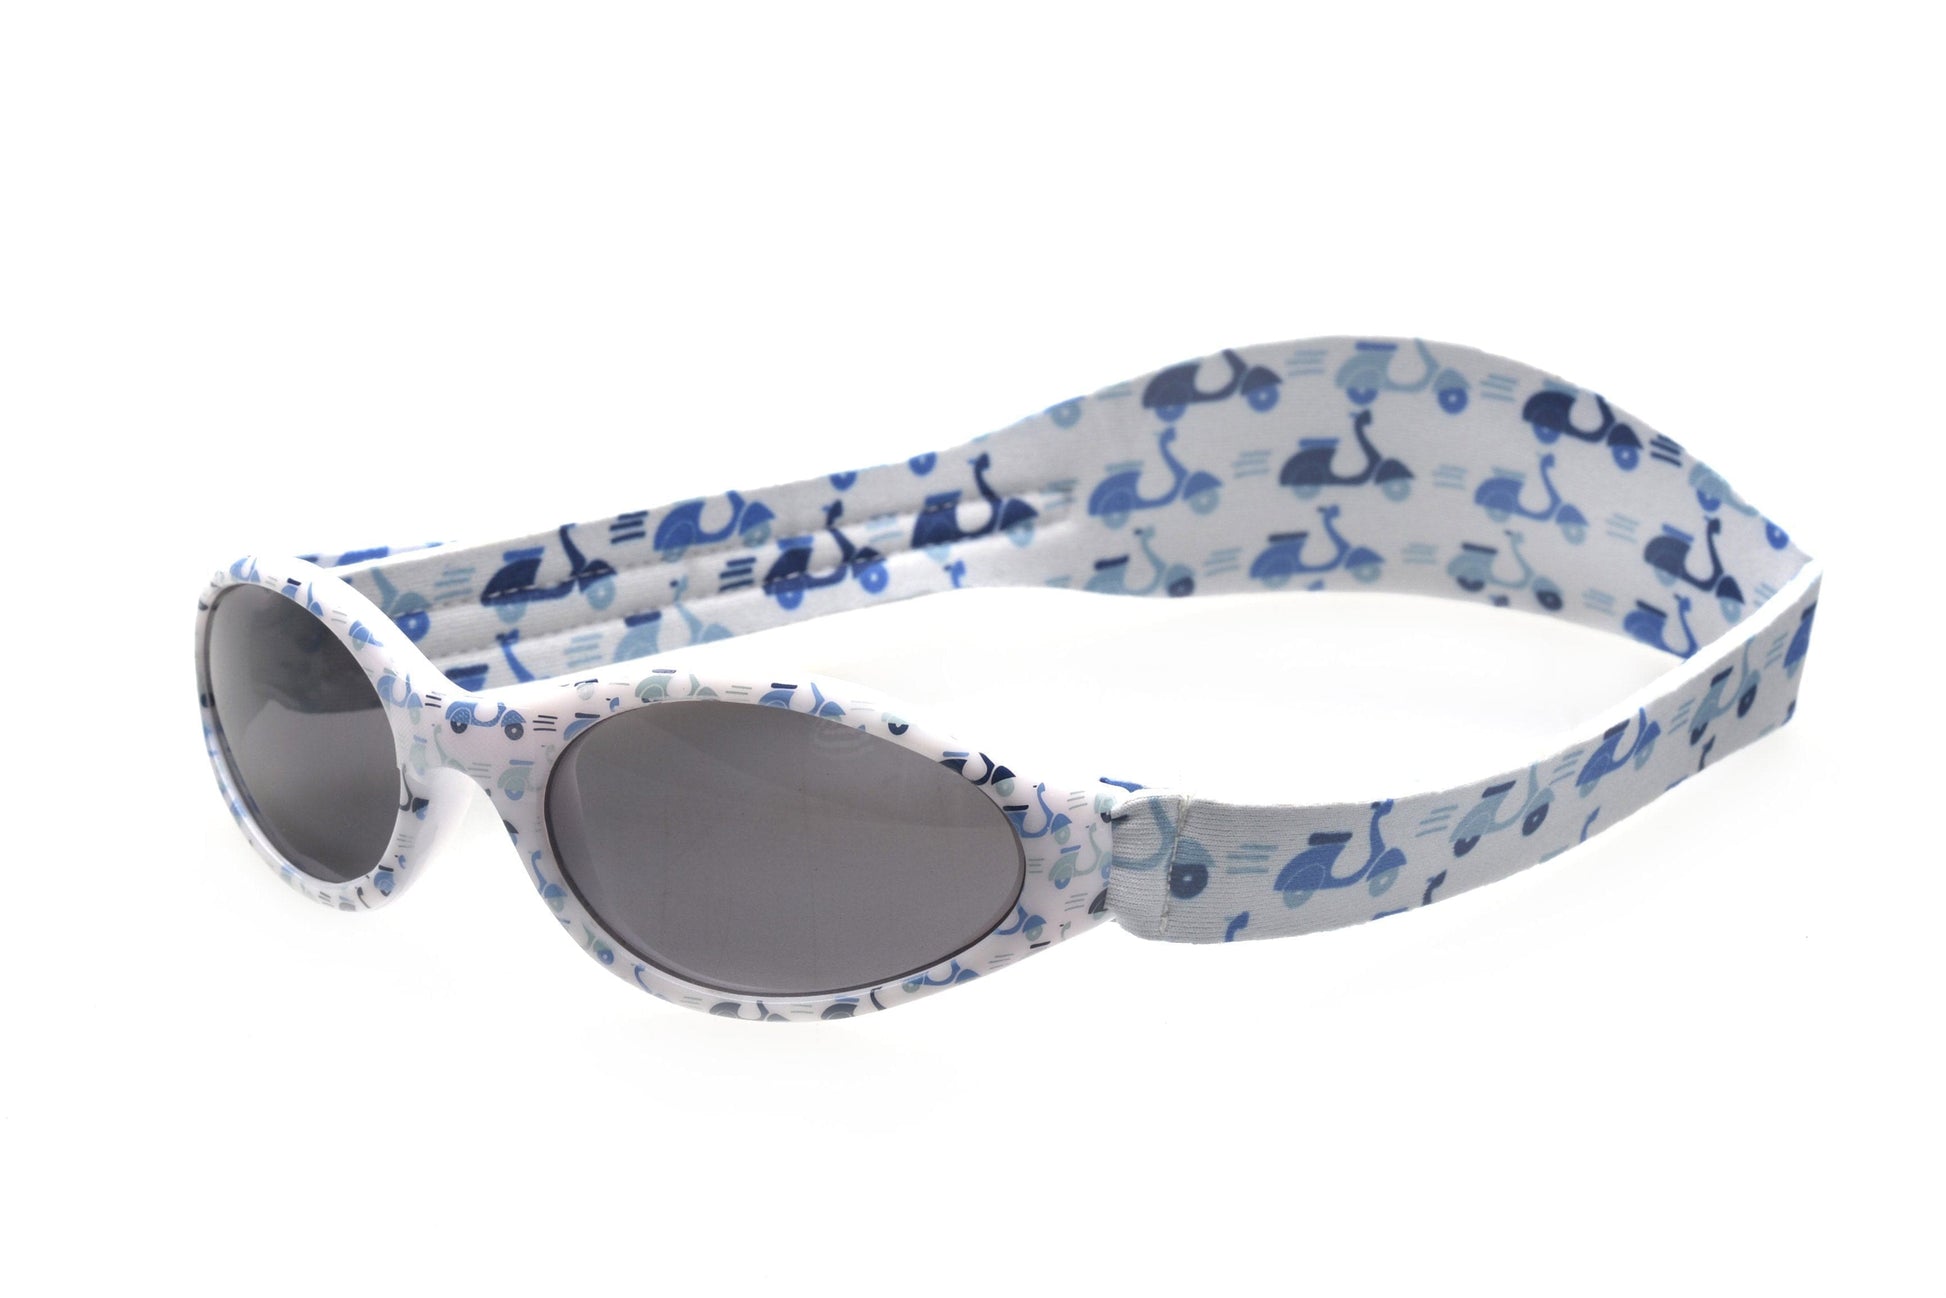 BANZ Sunglasses Toddler Sunglasses - Bubzee Polarized Wrap Around Vespa Tour